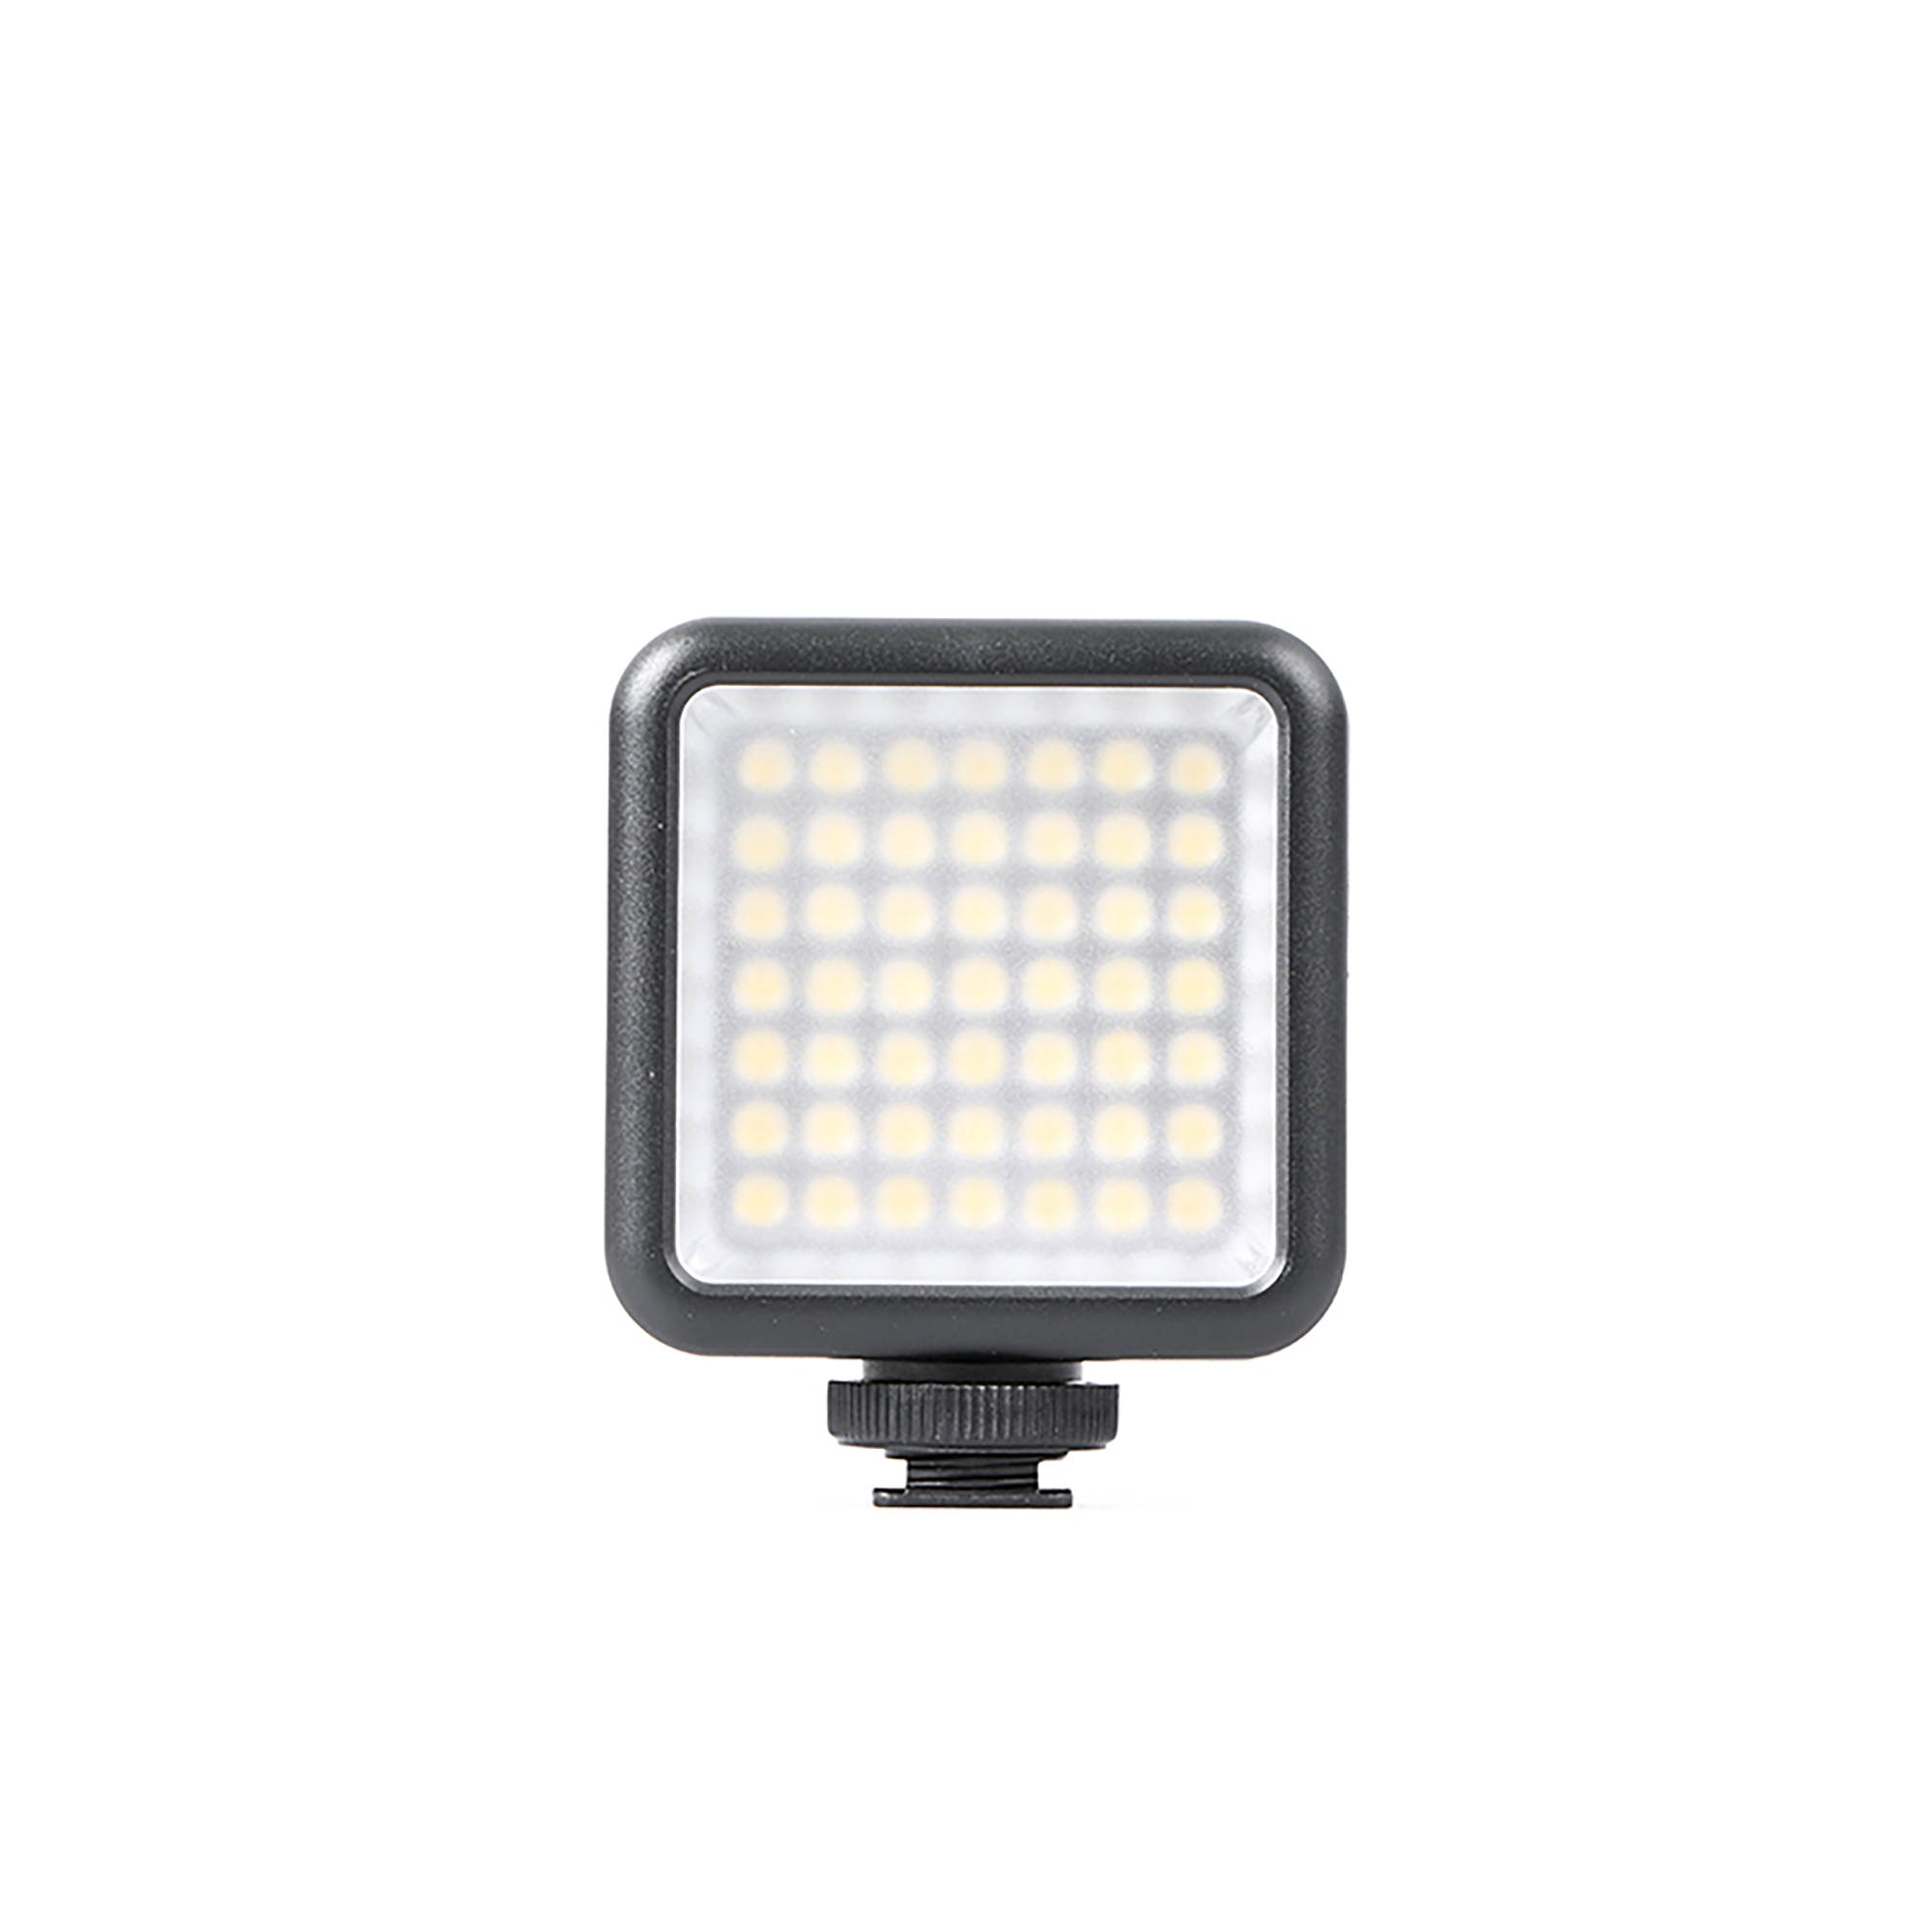 FOTOWORX Portable Video Light 49 LED Photography Lighting